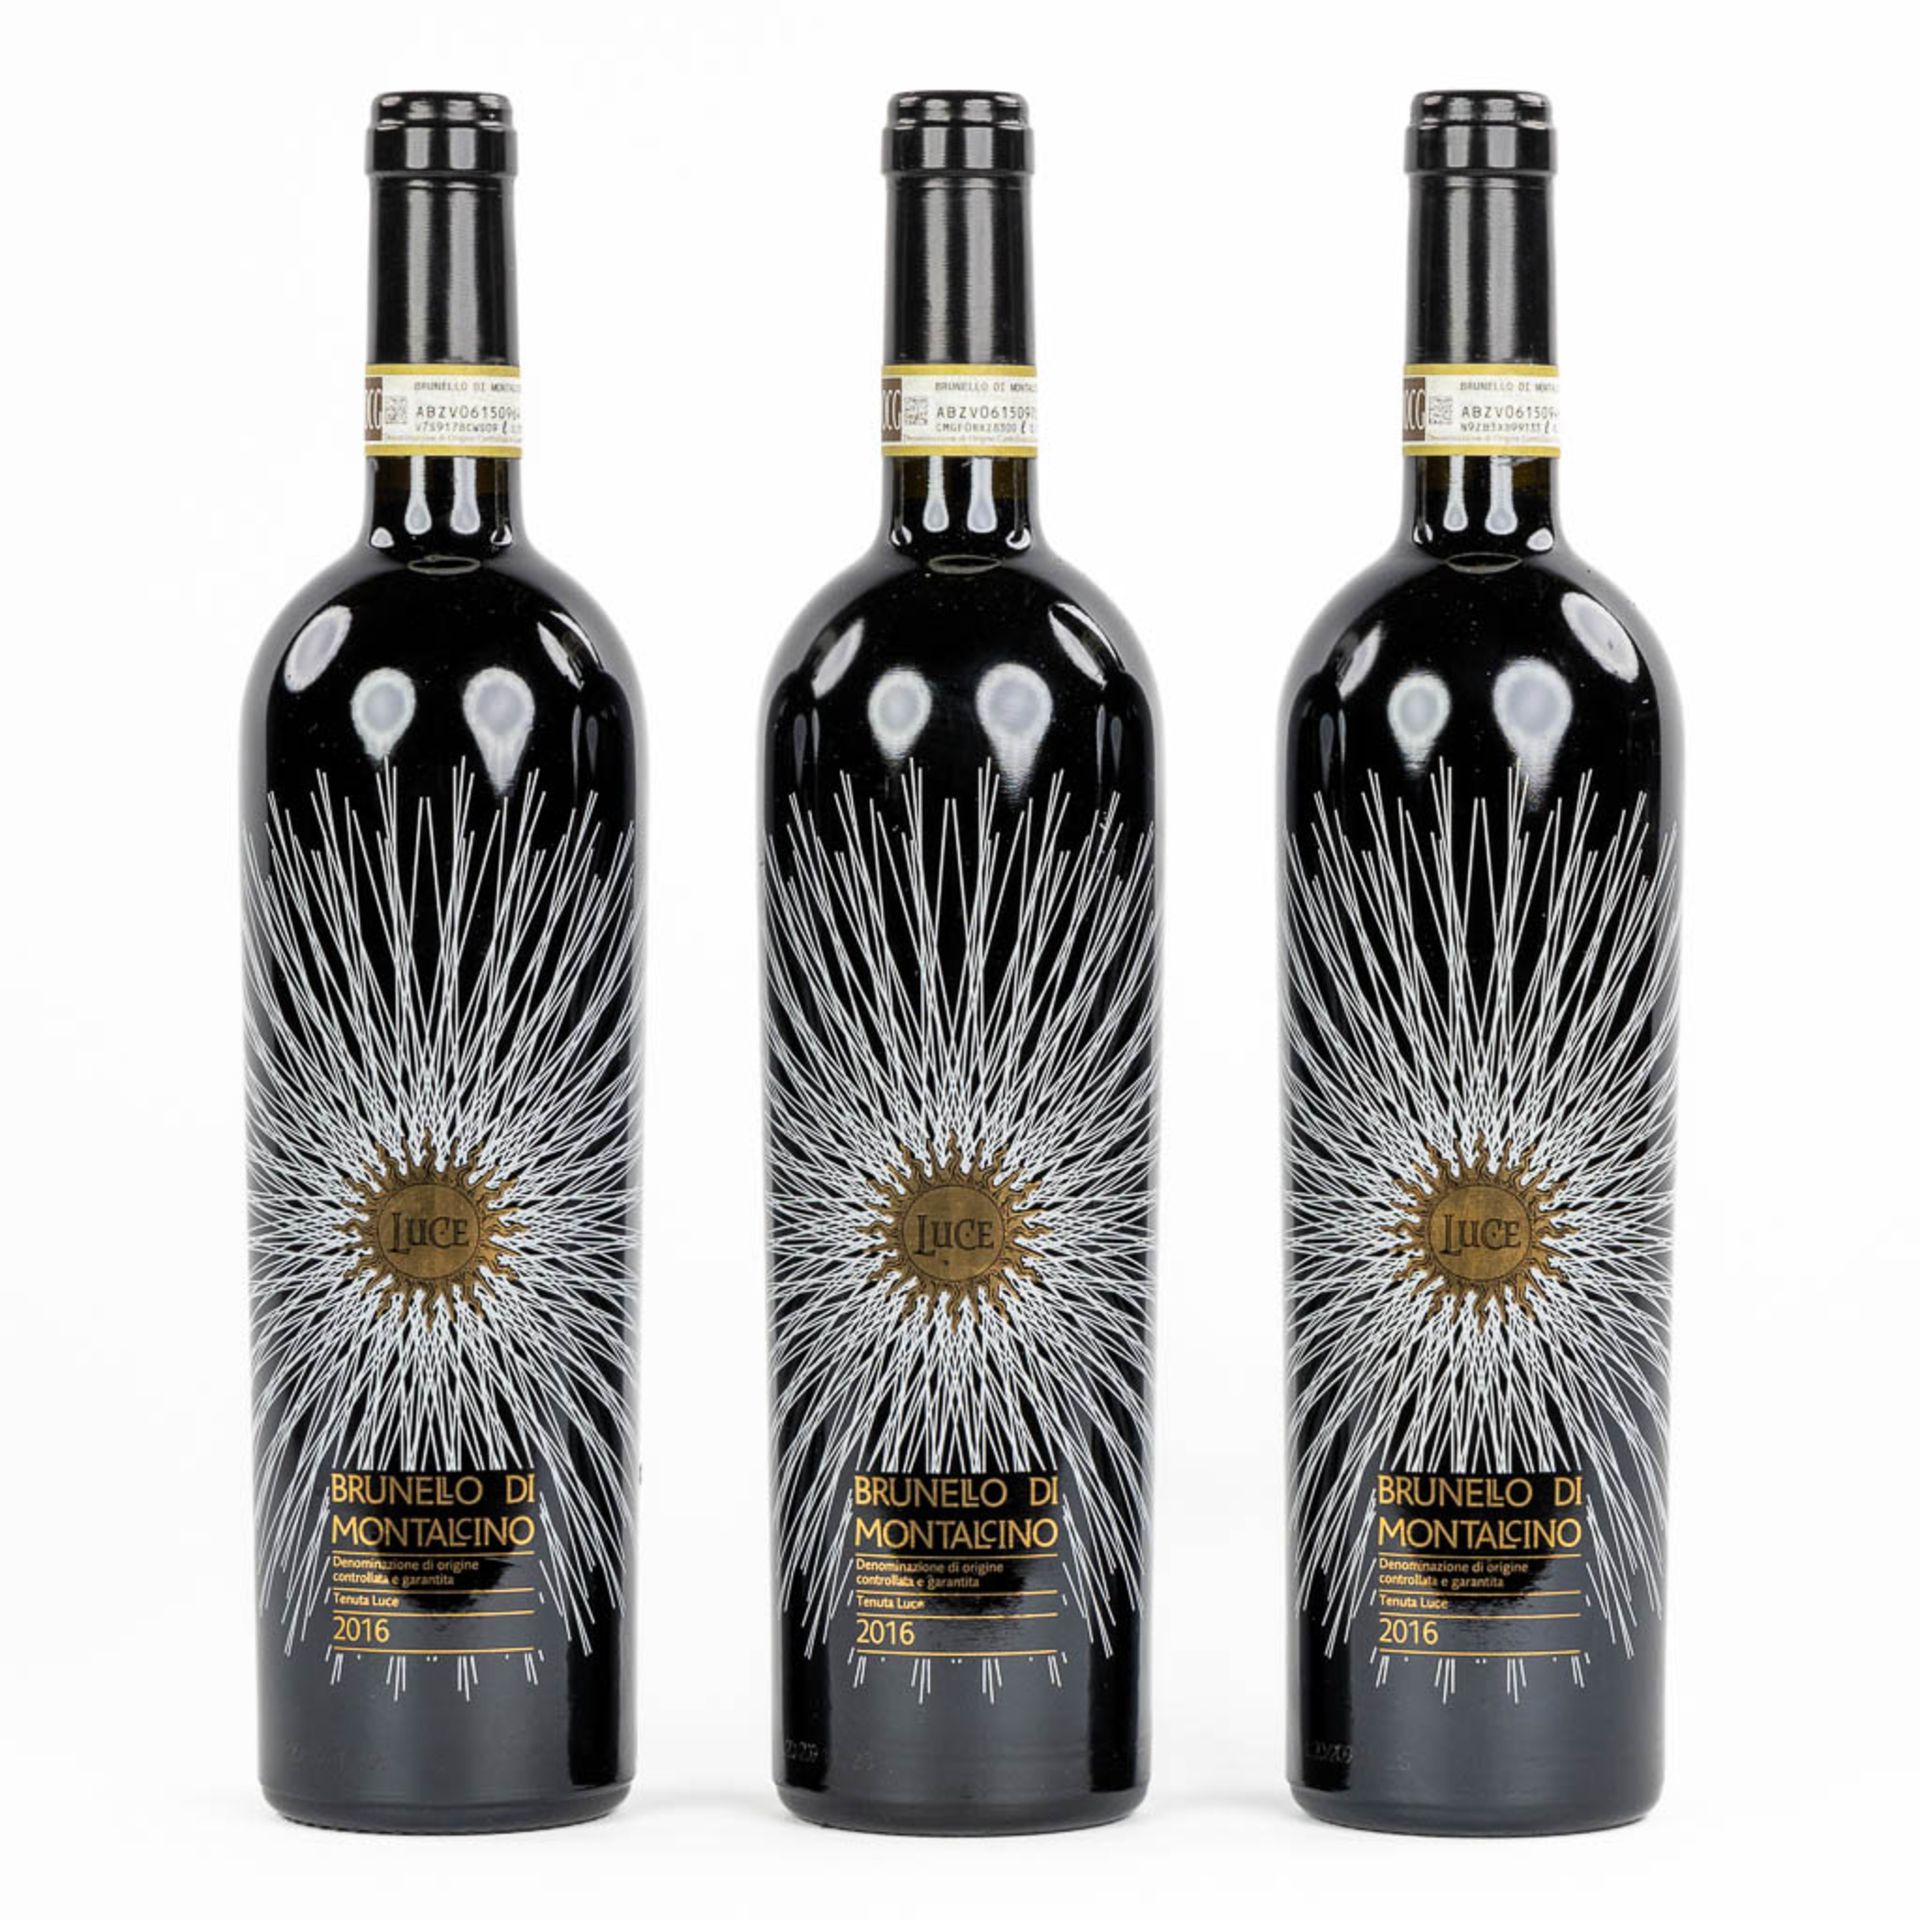 2016 Luce Brunello Di Montalcino, 3 bottles. - Image 5 of 7